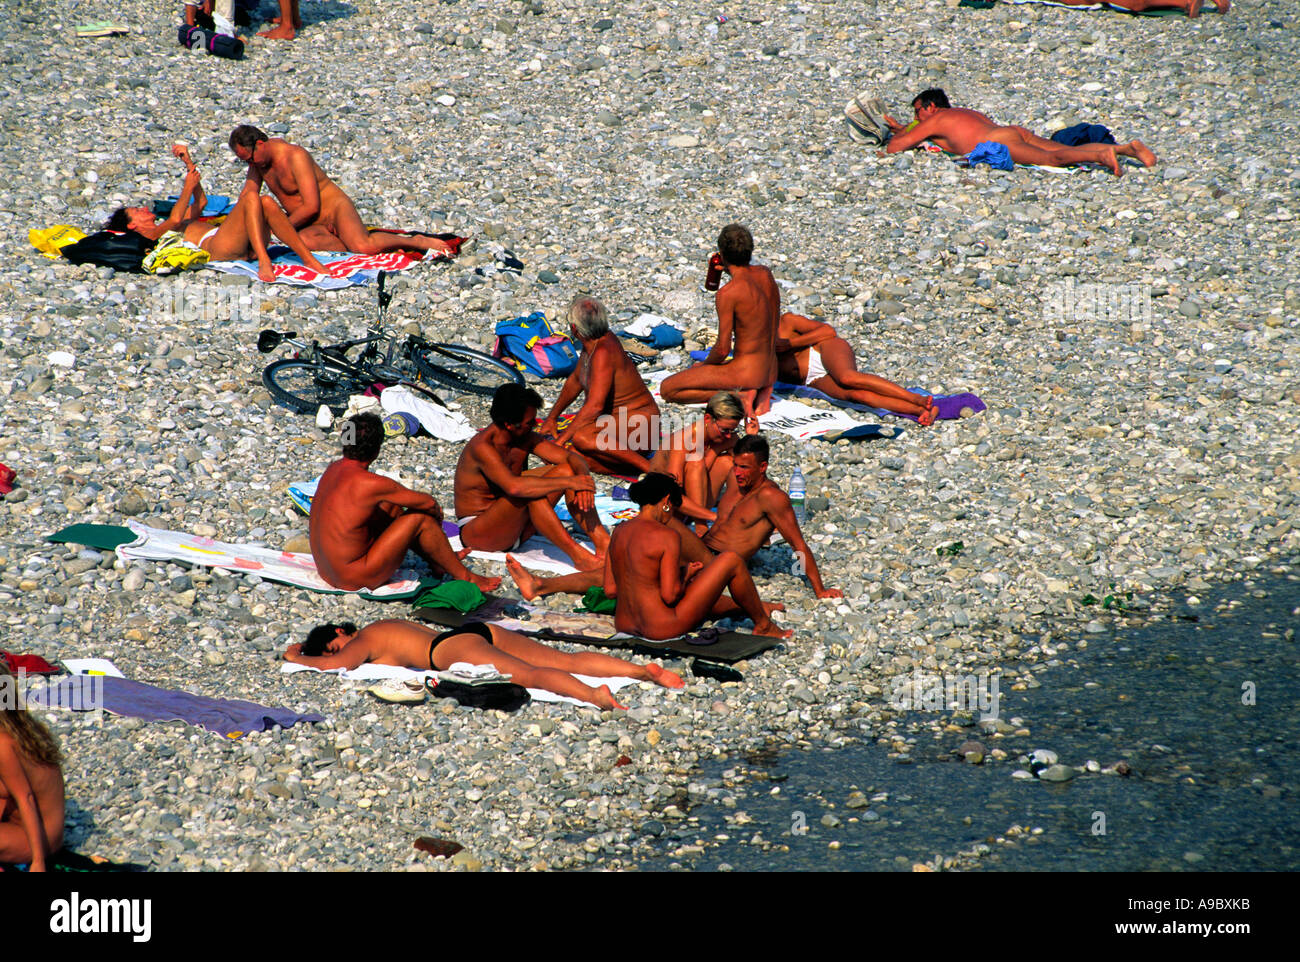 Fkk bilder deutsche Nudisten